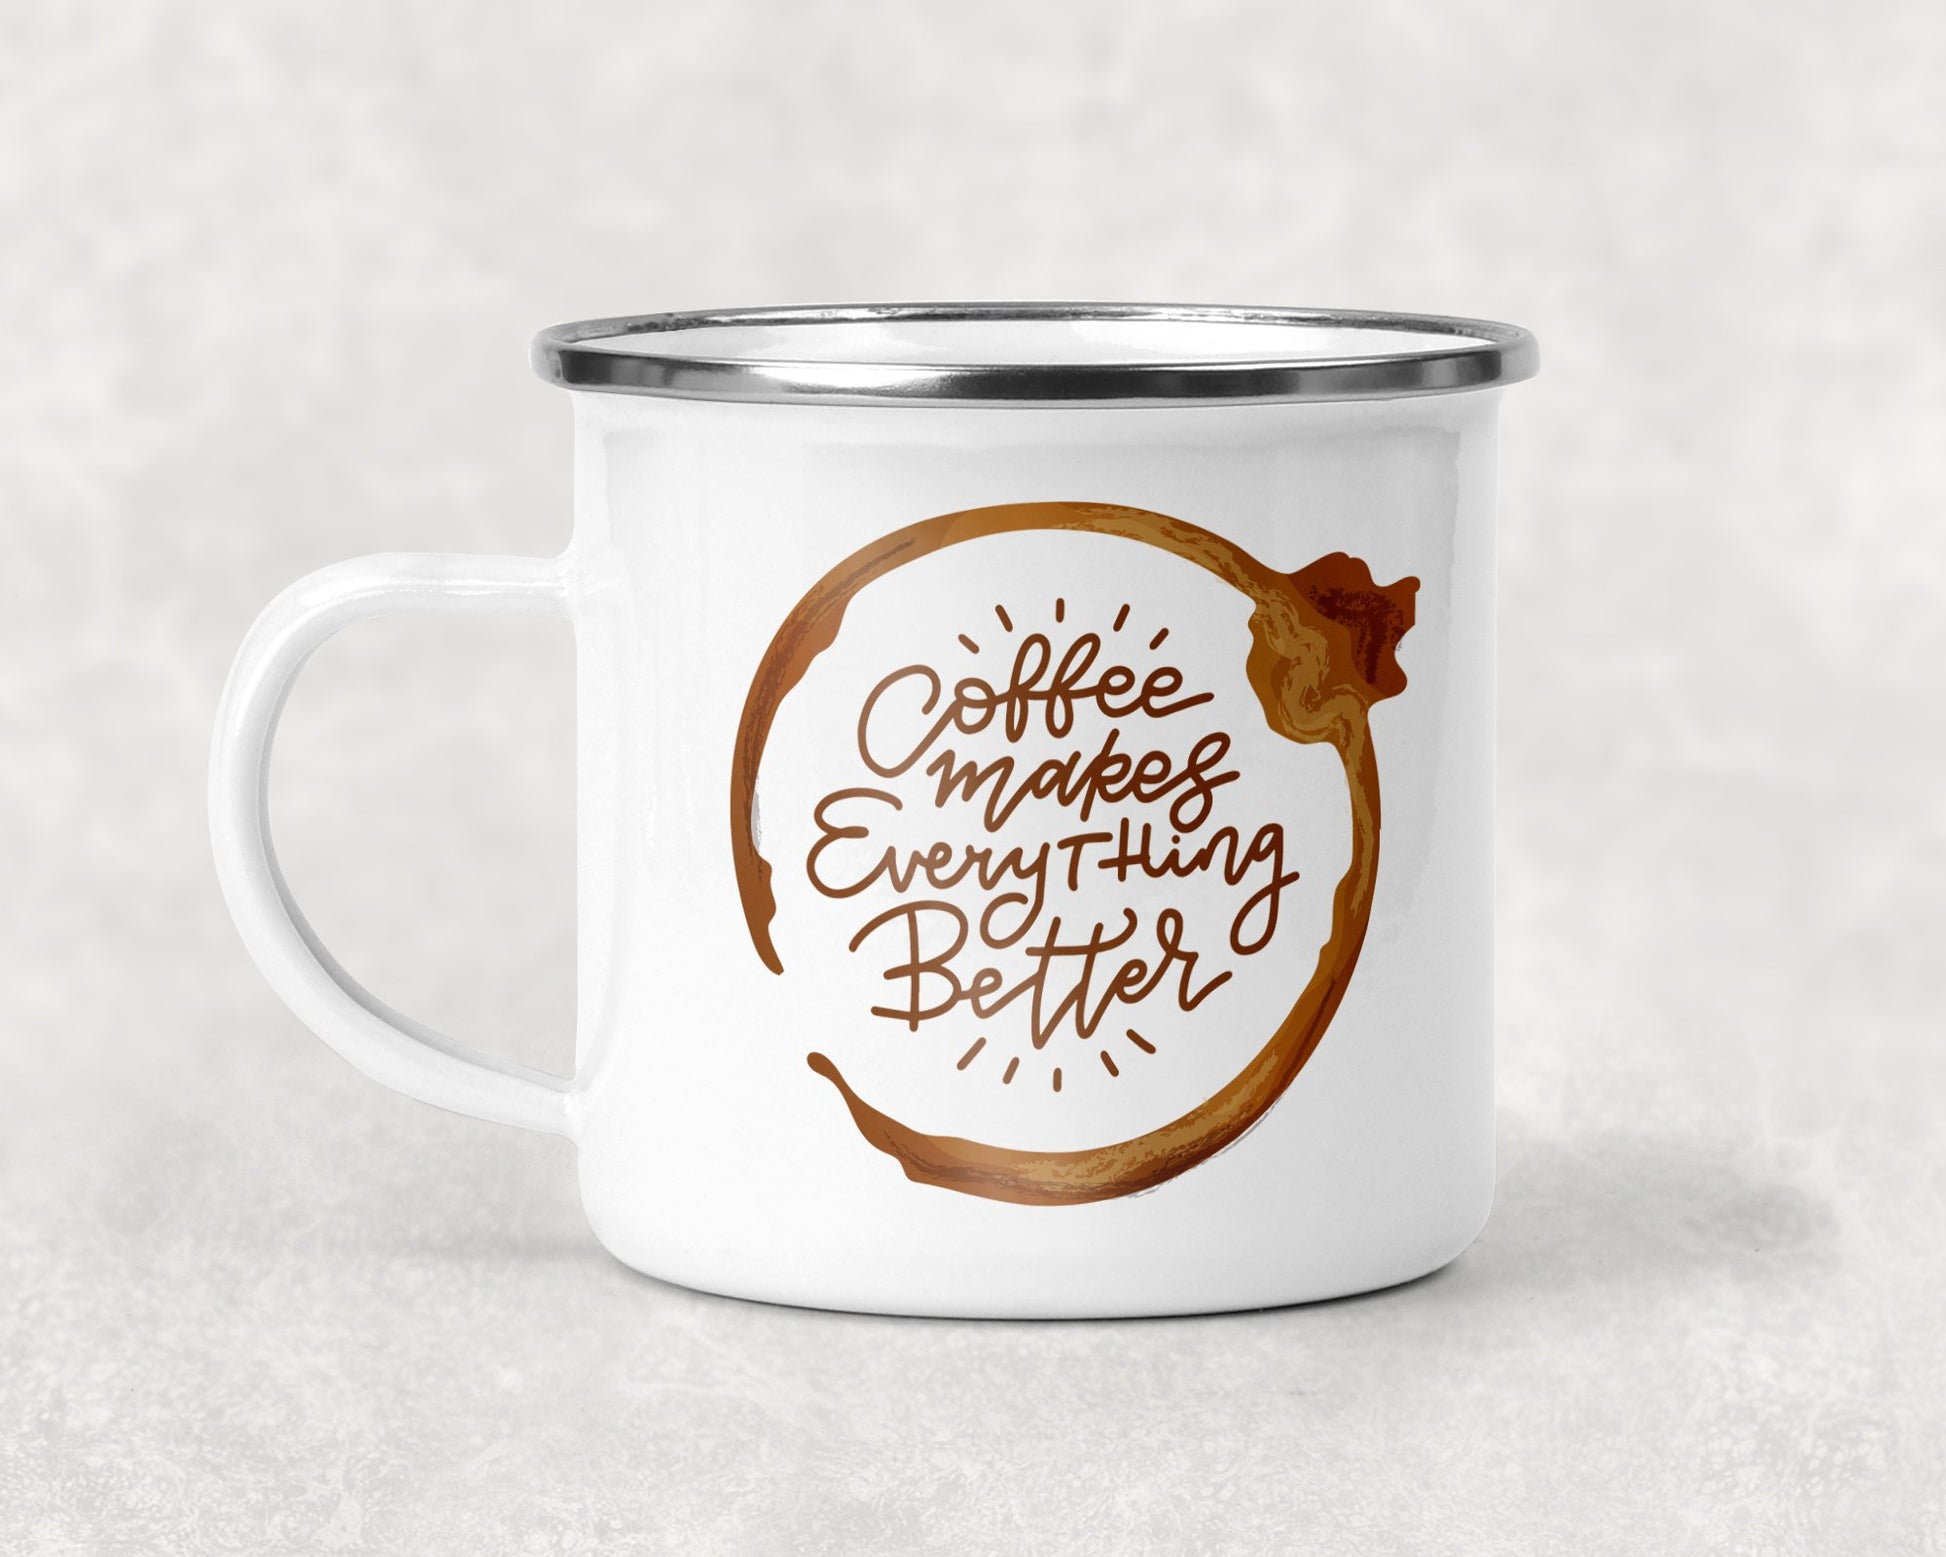 Coffee Makes Everything Better Mug